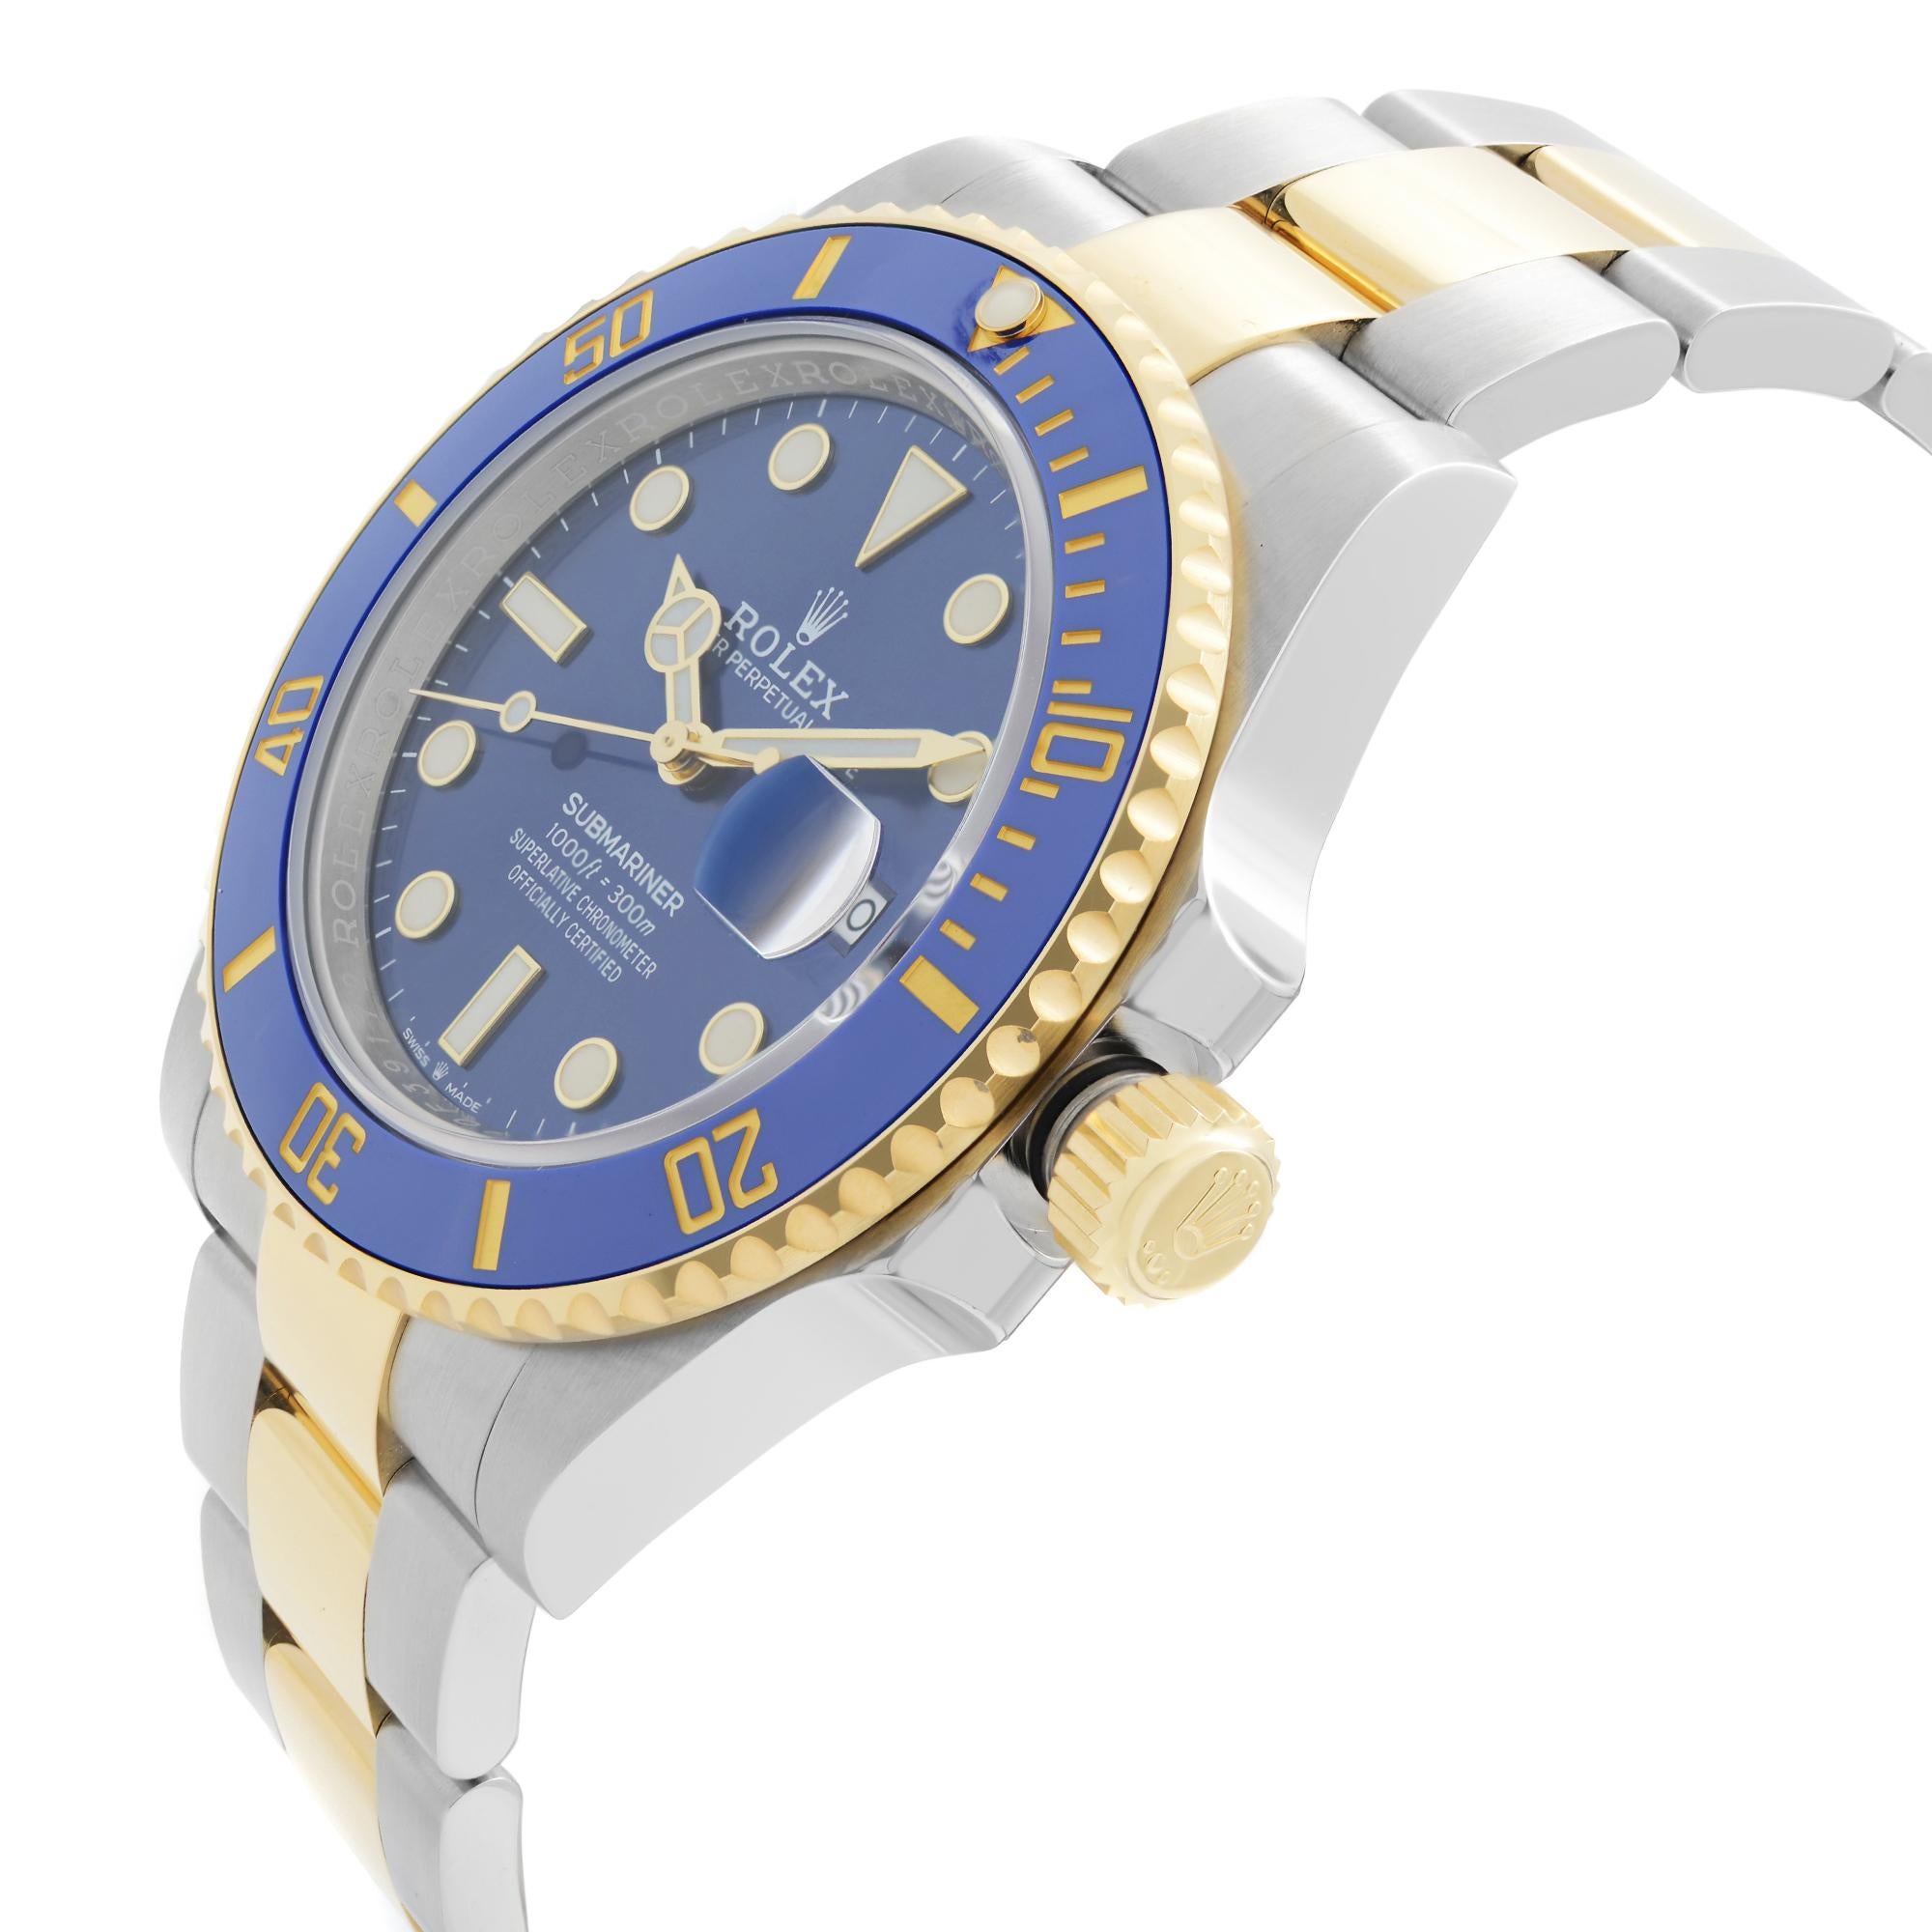 rolex submariner blue gold price